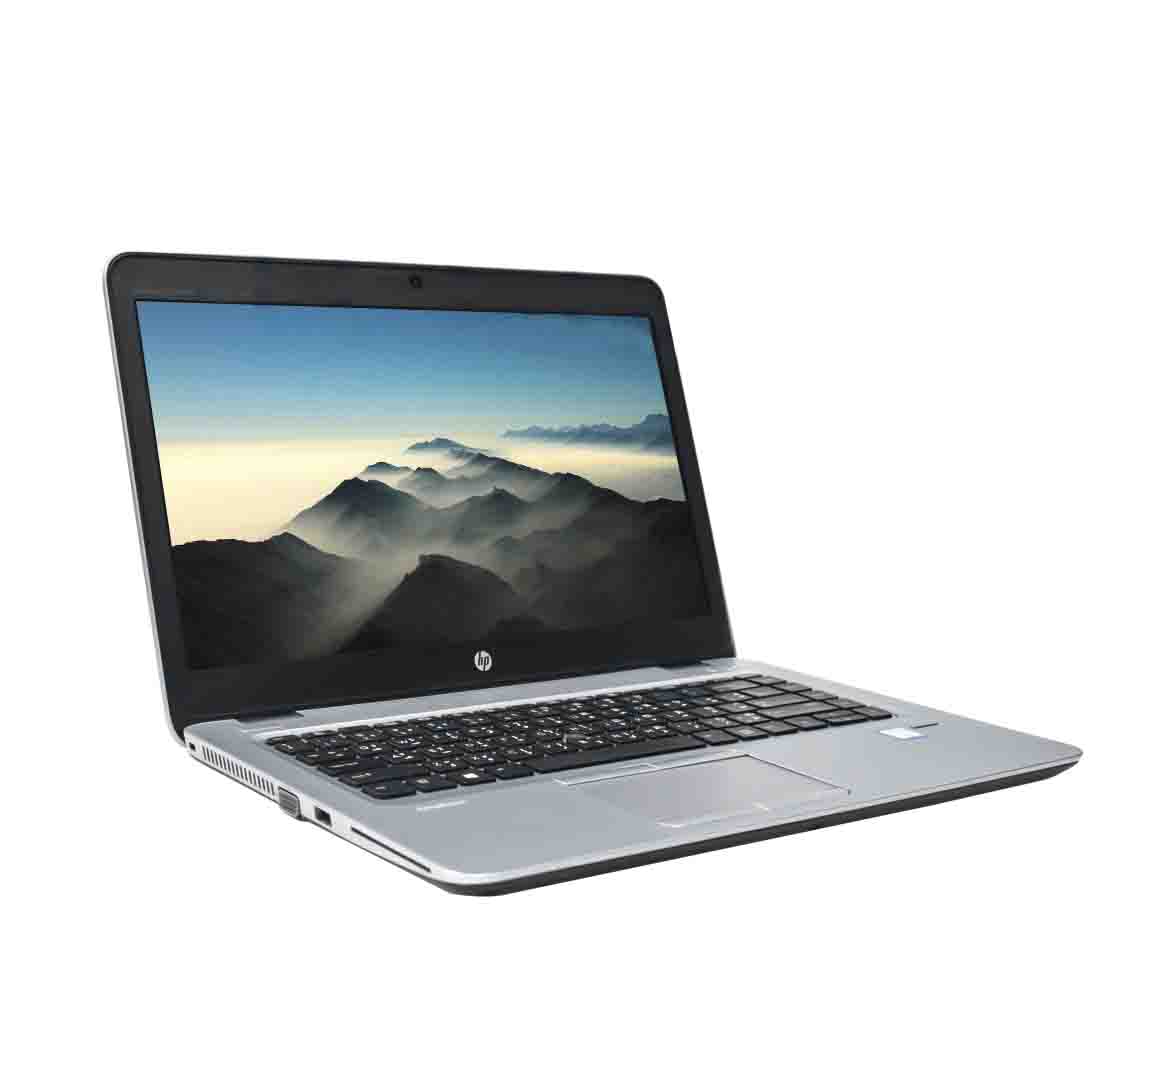 HP EliteBook 840 G3 Business Laptop, Intel Core i7-6th Gen. CPU